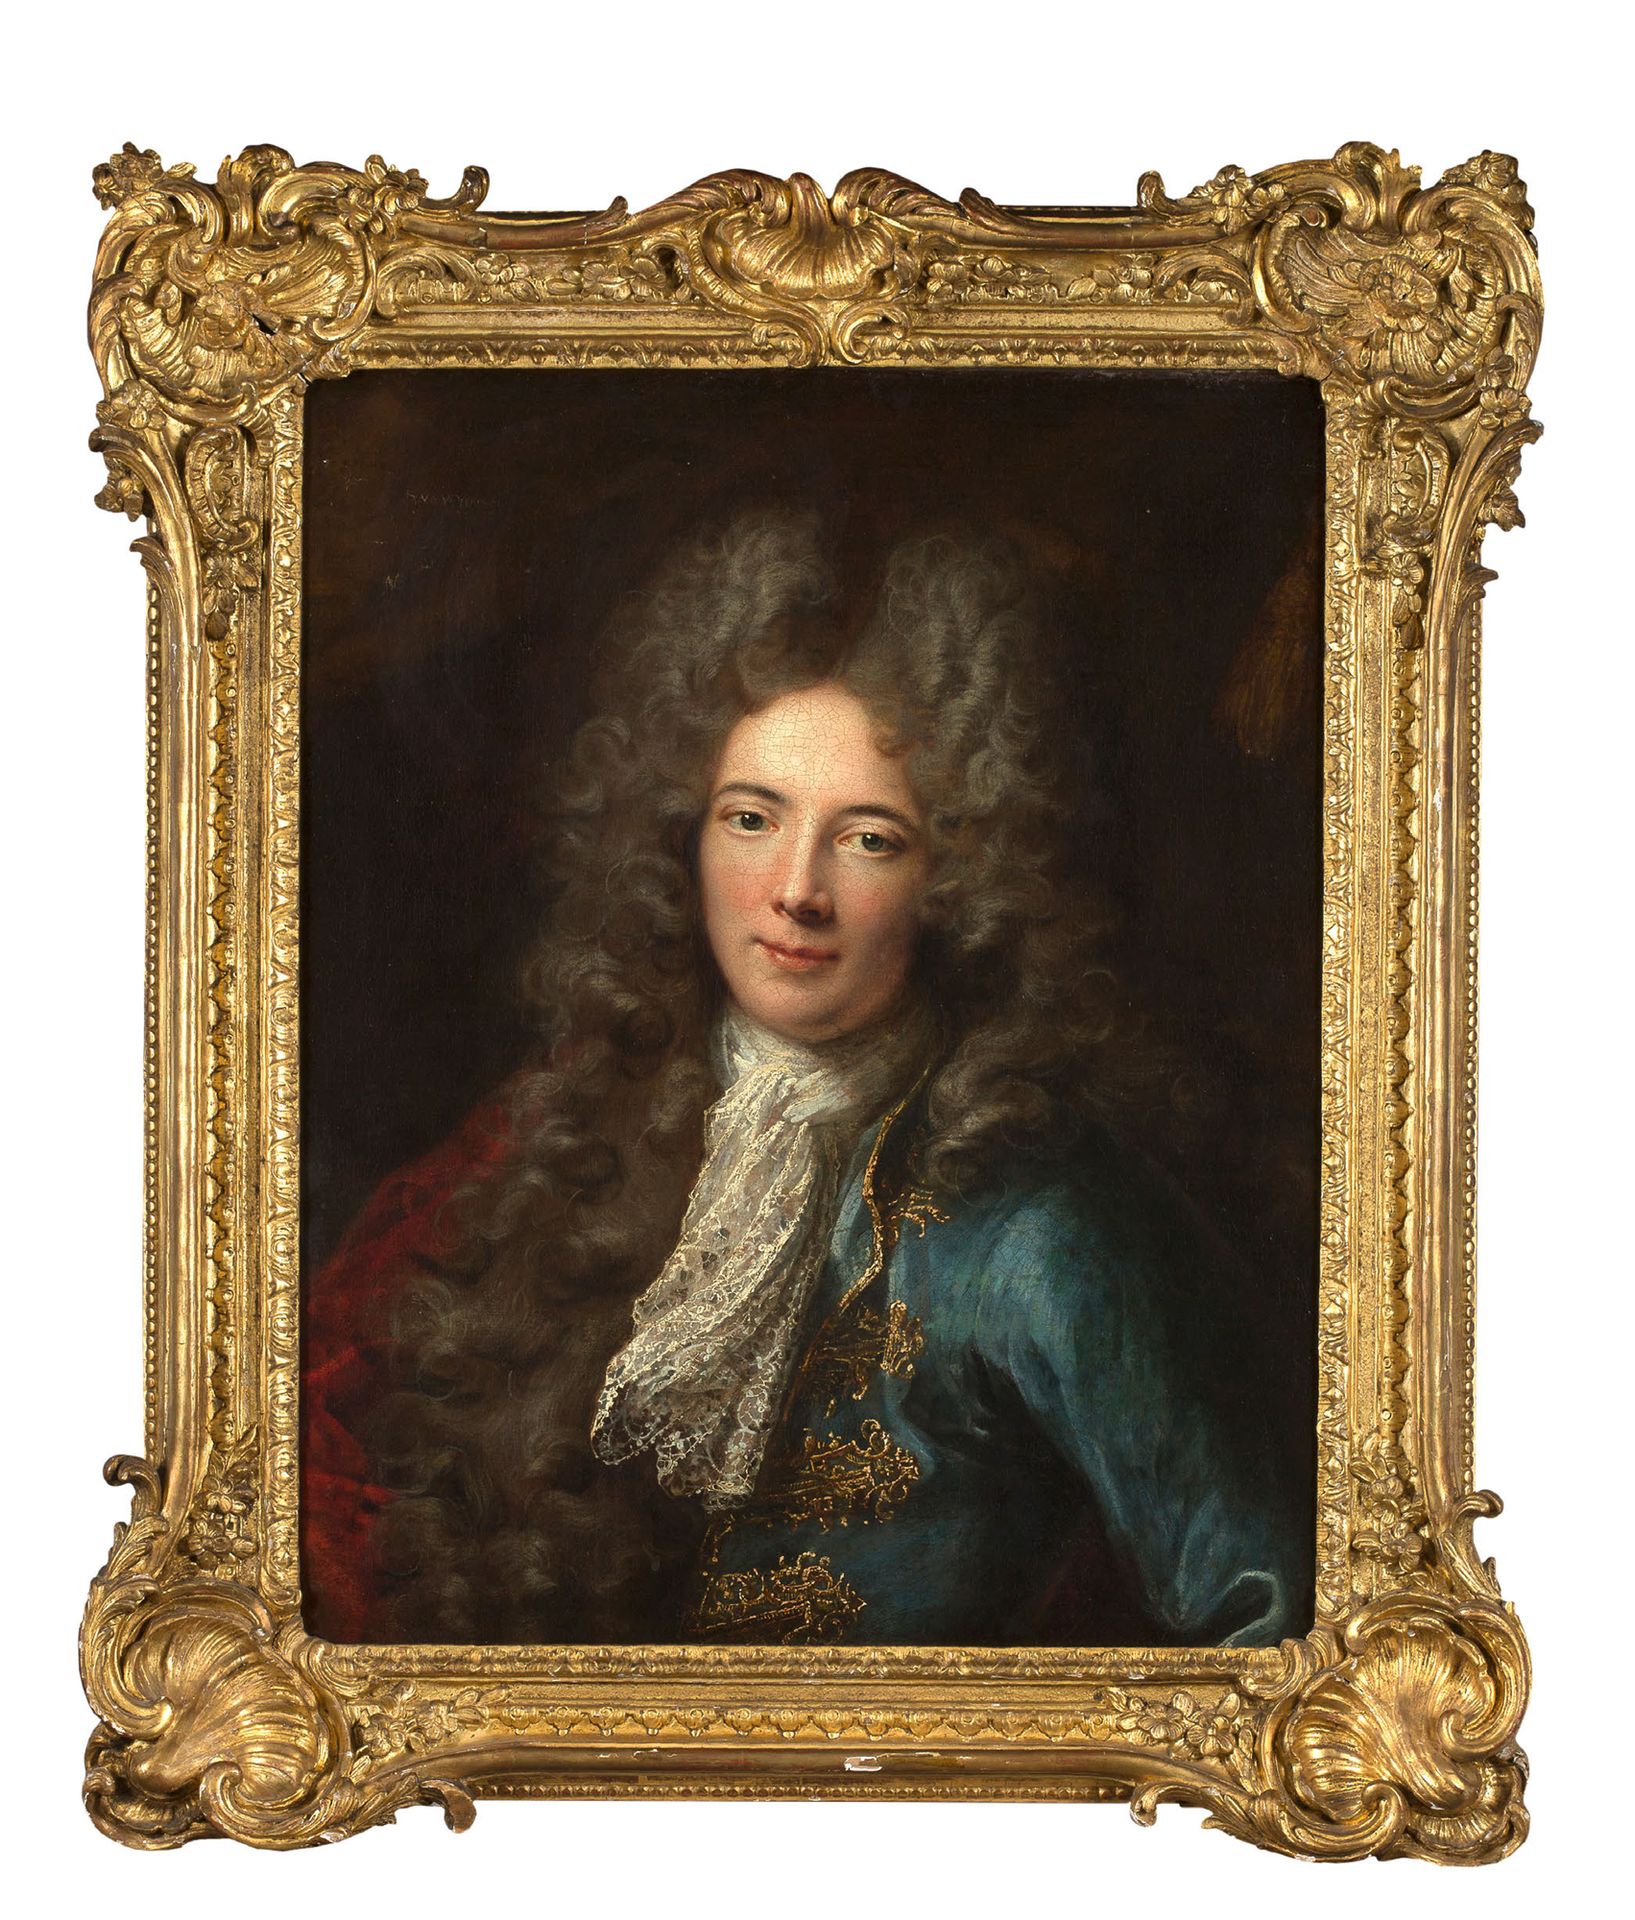 CHARLES-ANTOINE COYPEL — PARIS, 1694 - 1752 一个人的肖像
布面油画
66 x 54 cm

这幅肖像画显然属于十八世&hellip;